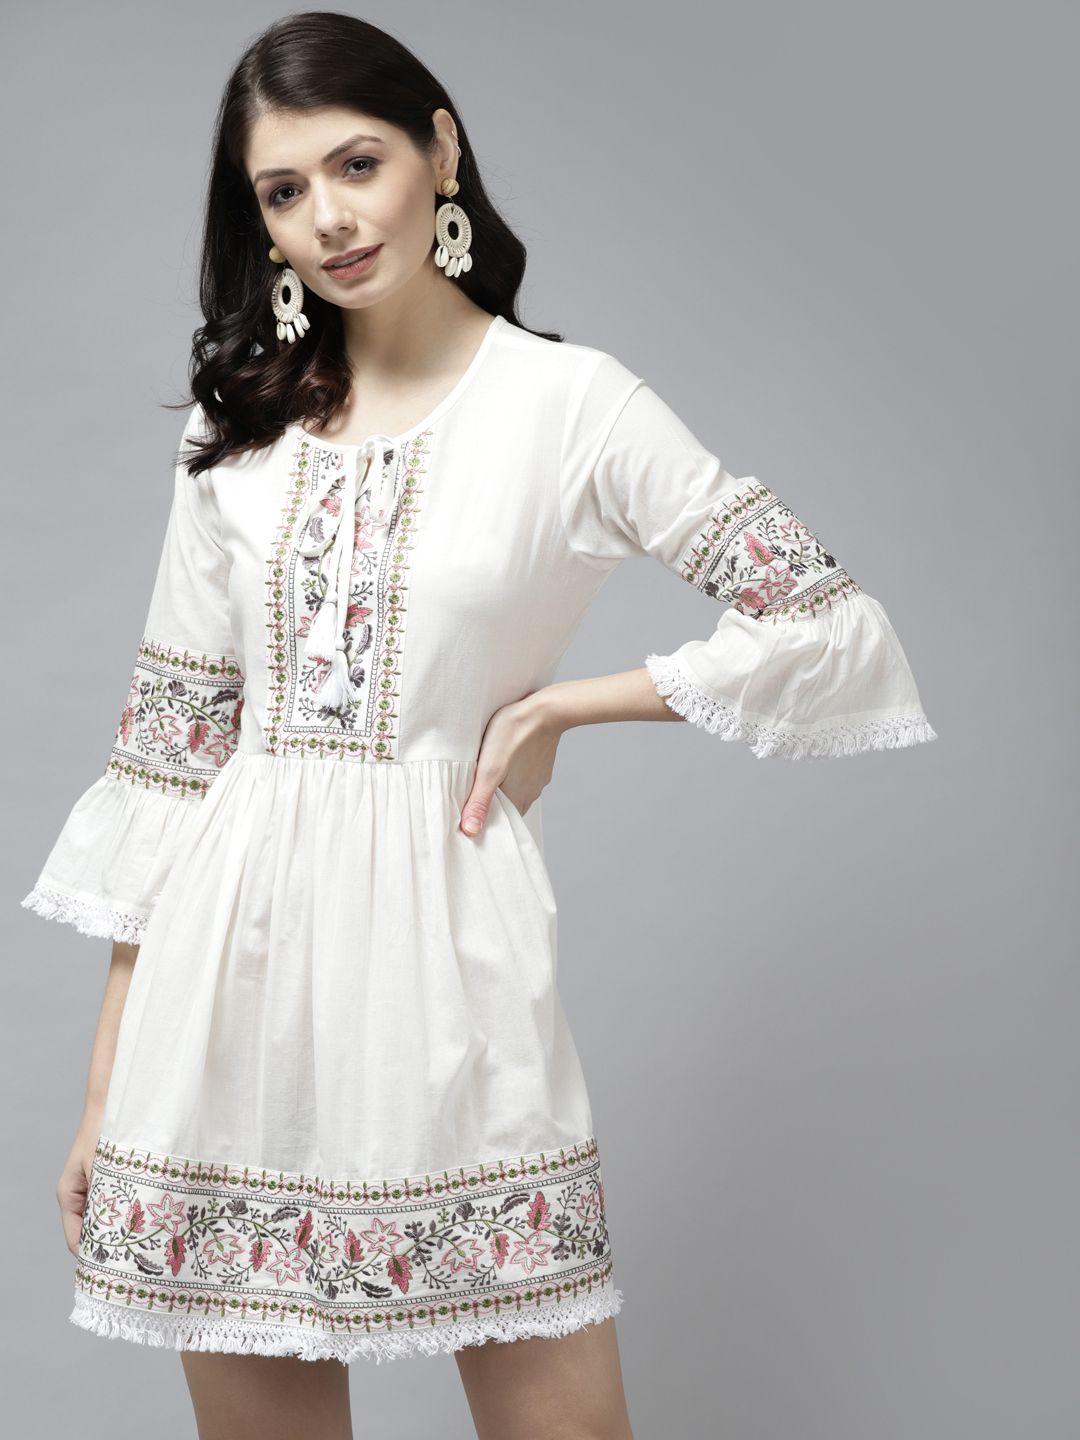 yufta white ethnic motifs embroidered cotton ethnic dress